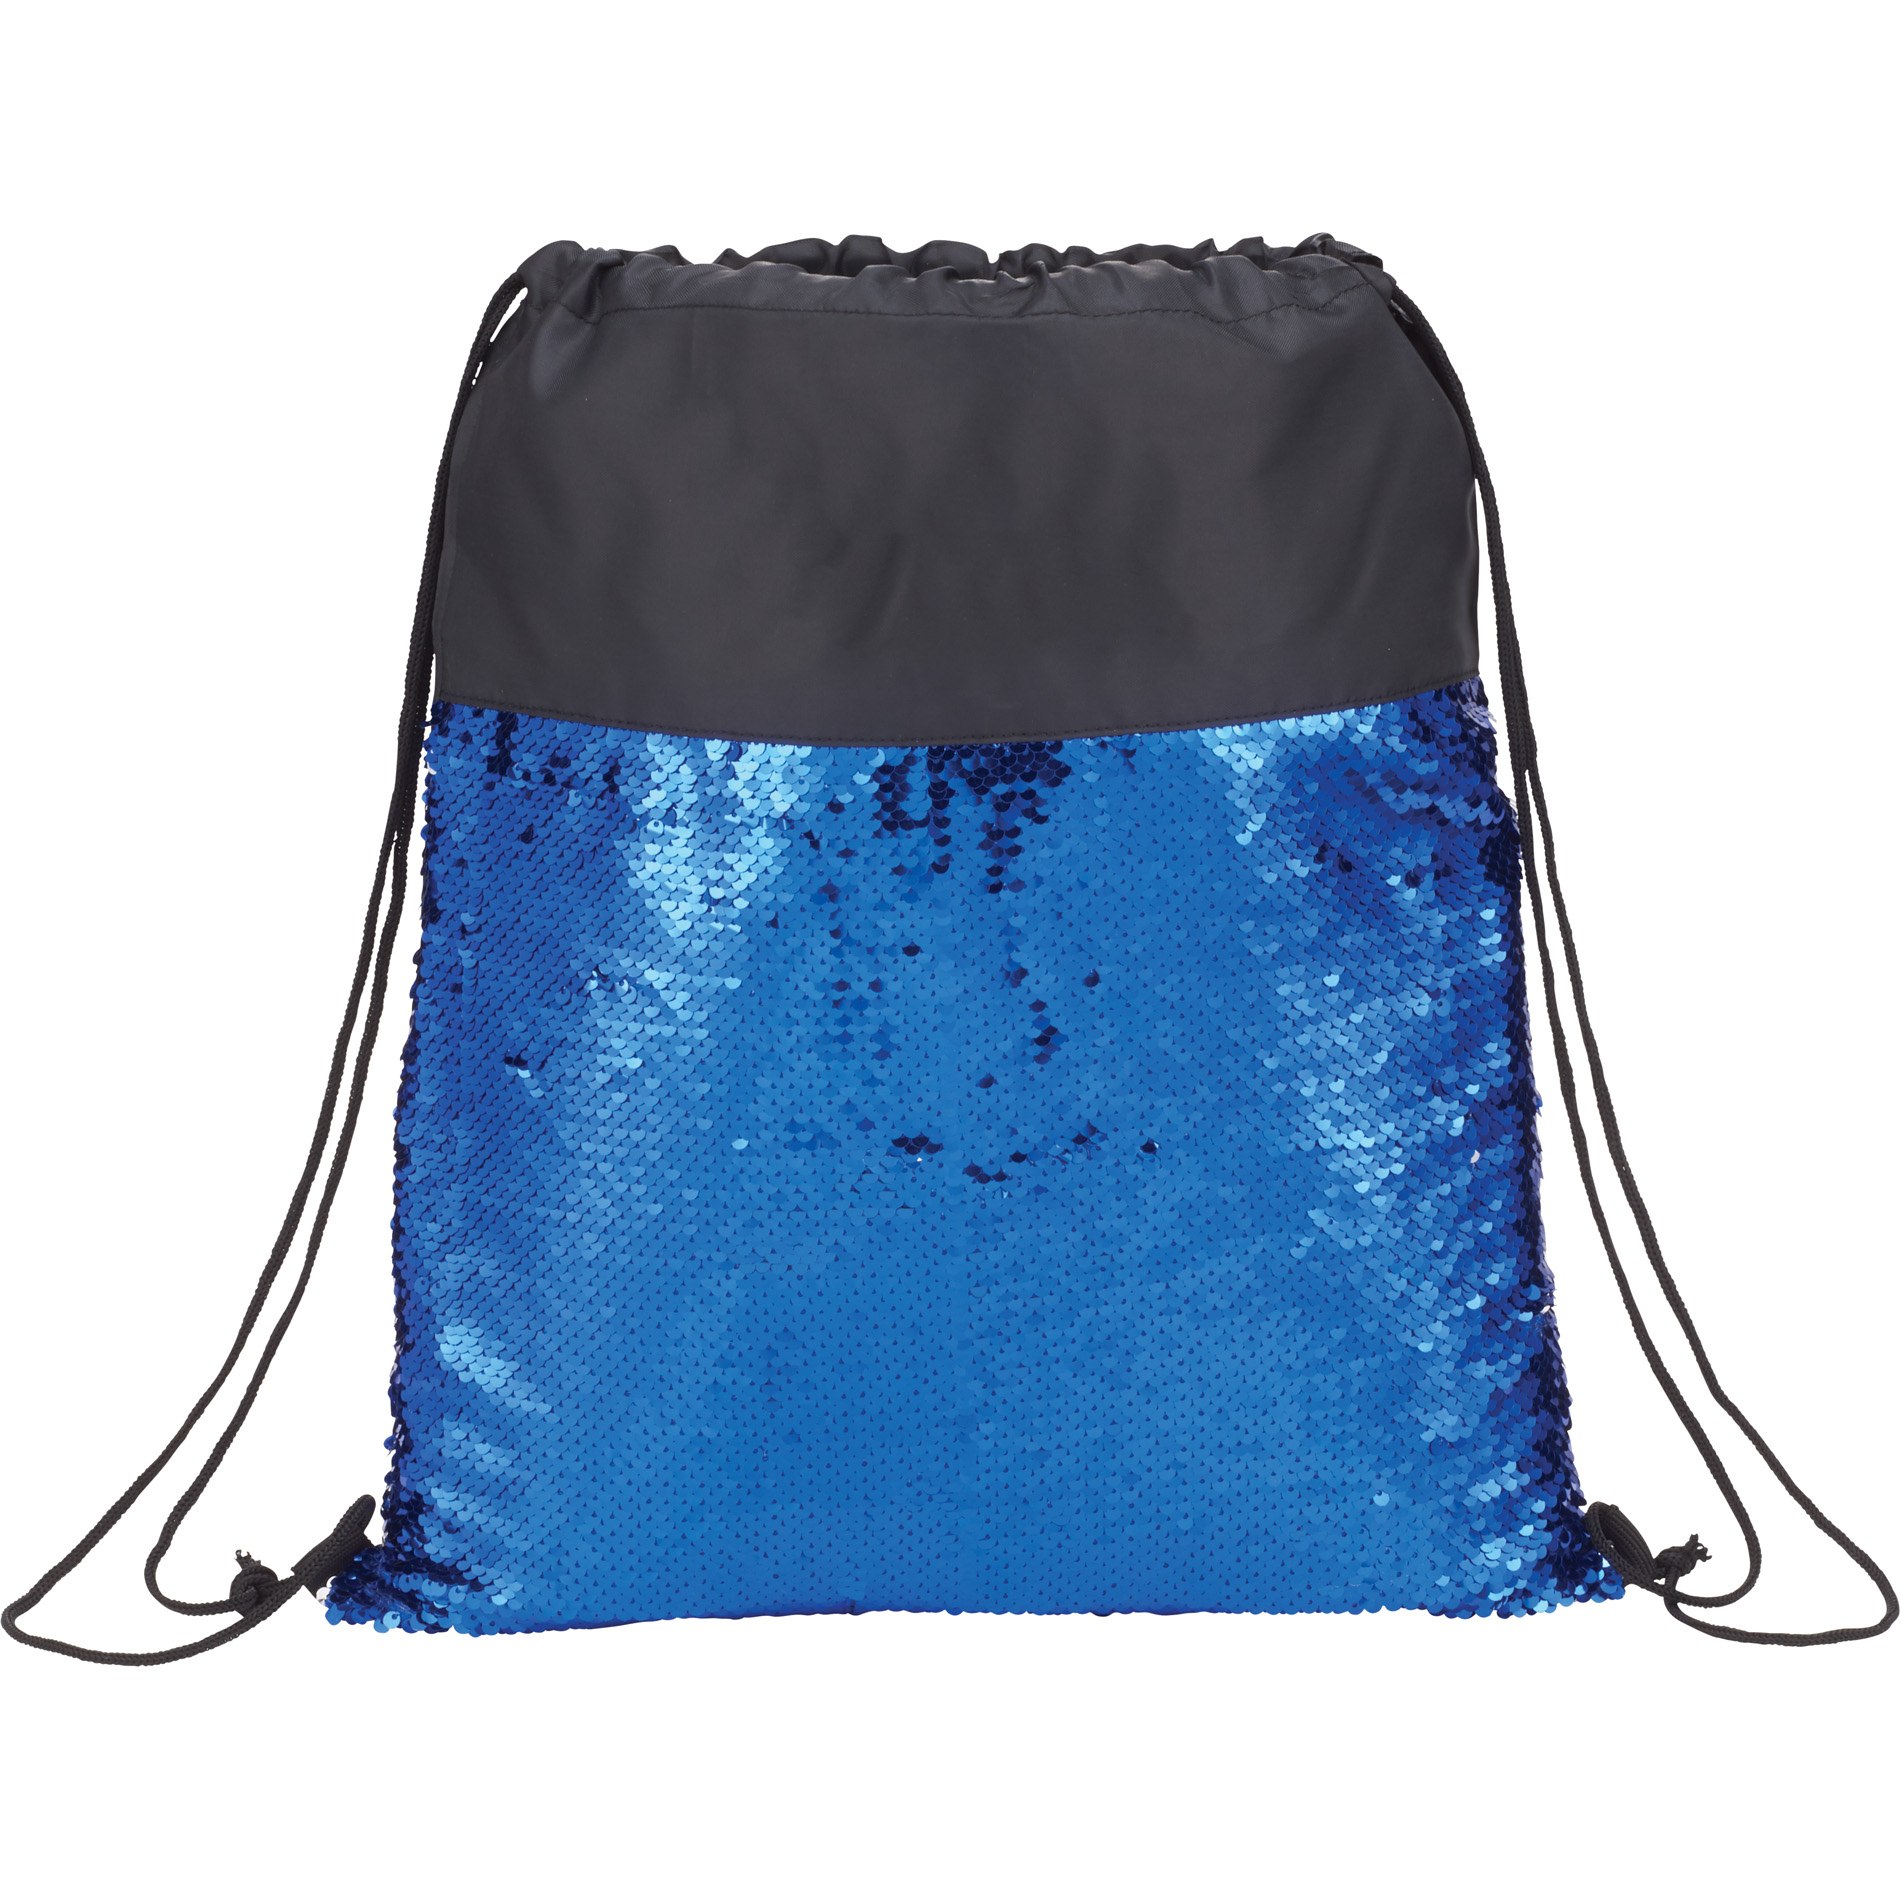 LEEDS 3005-59 - Mermaid Sequin Drawstring Bag